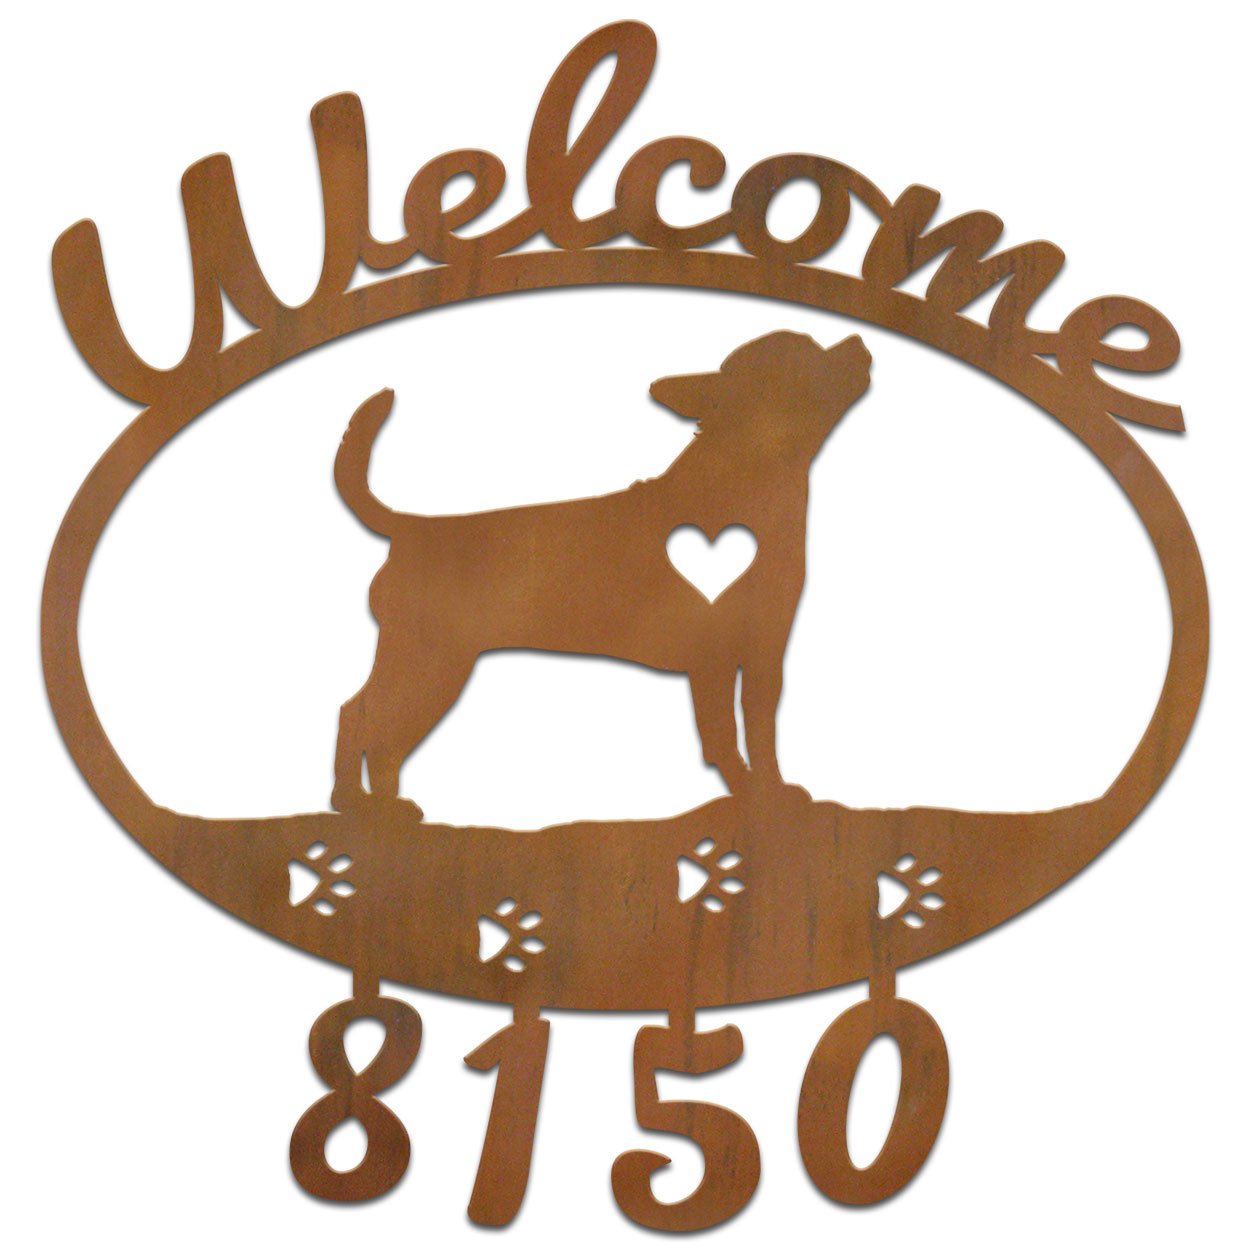 601304 - Chihuahua Welcome Custom House Numbers